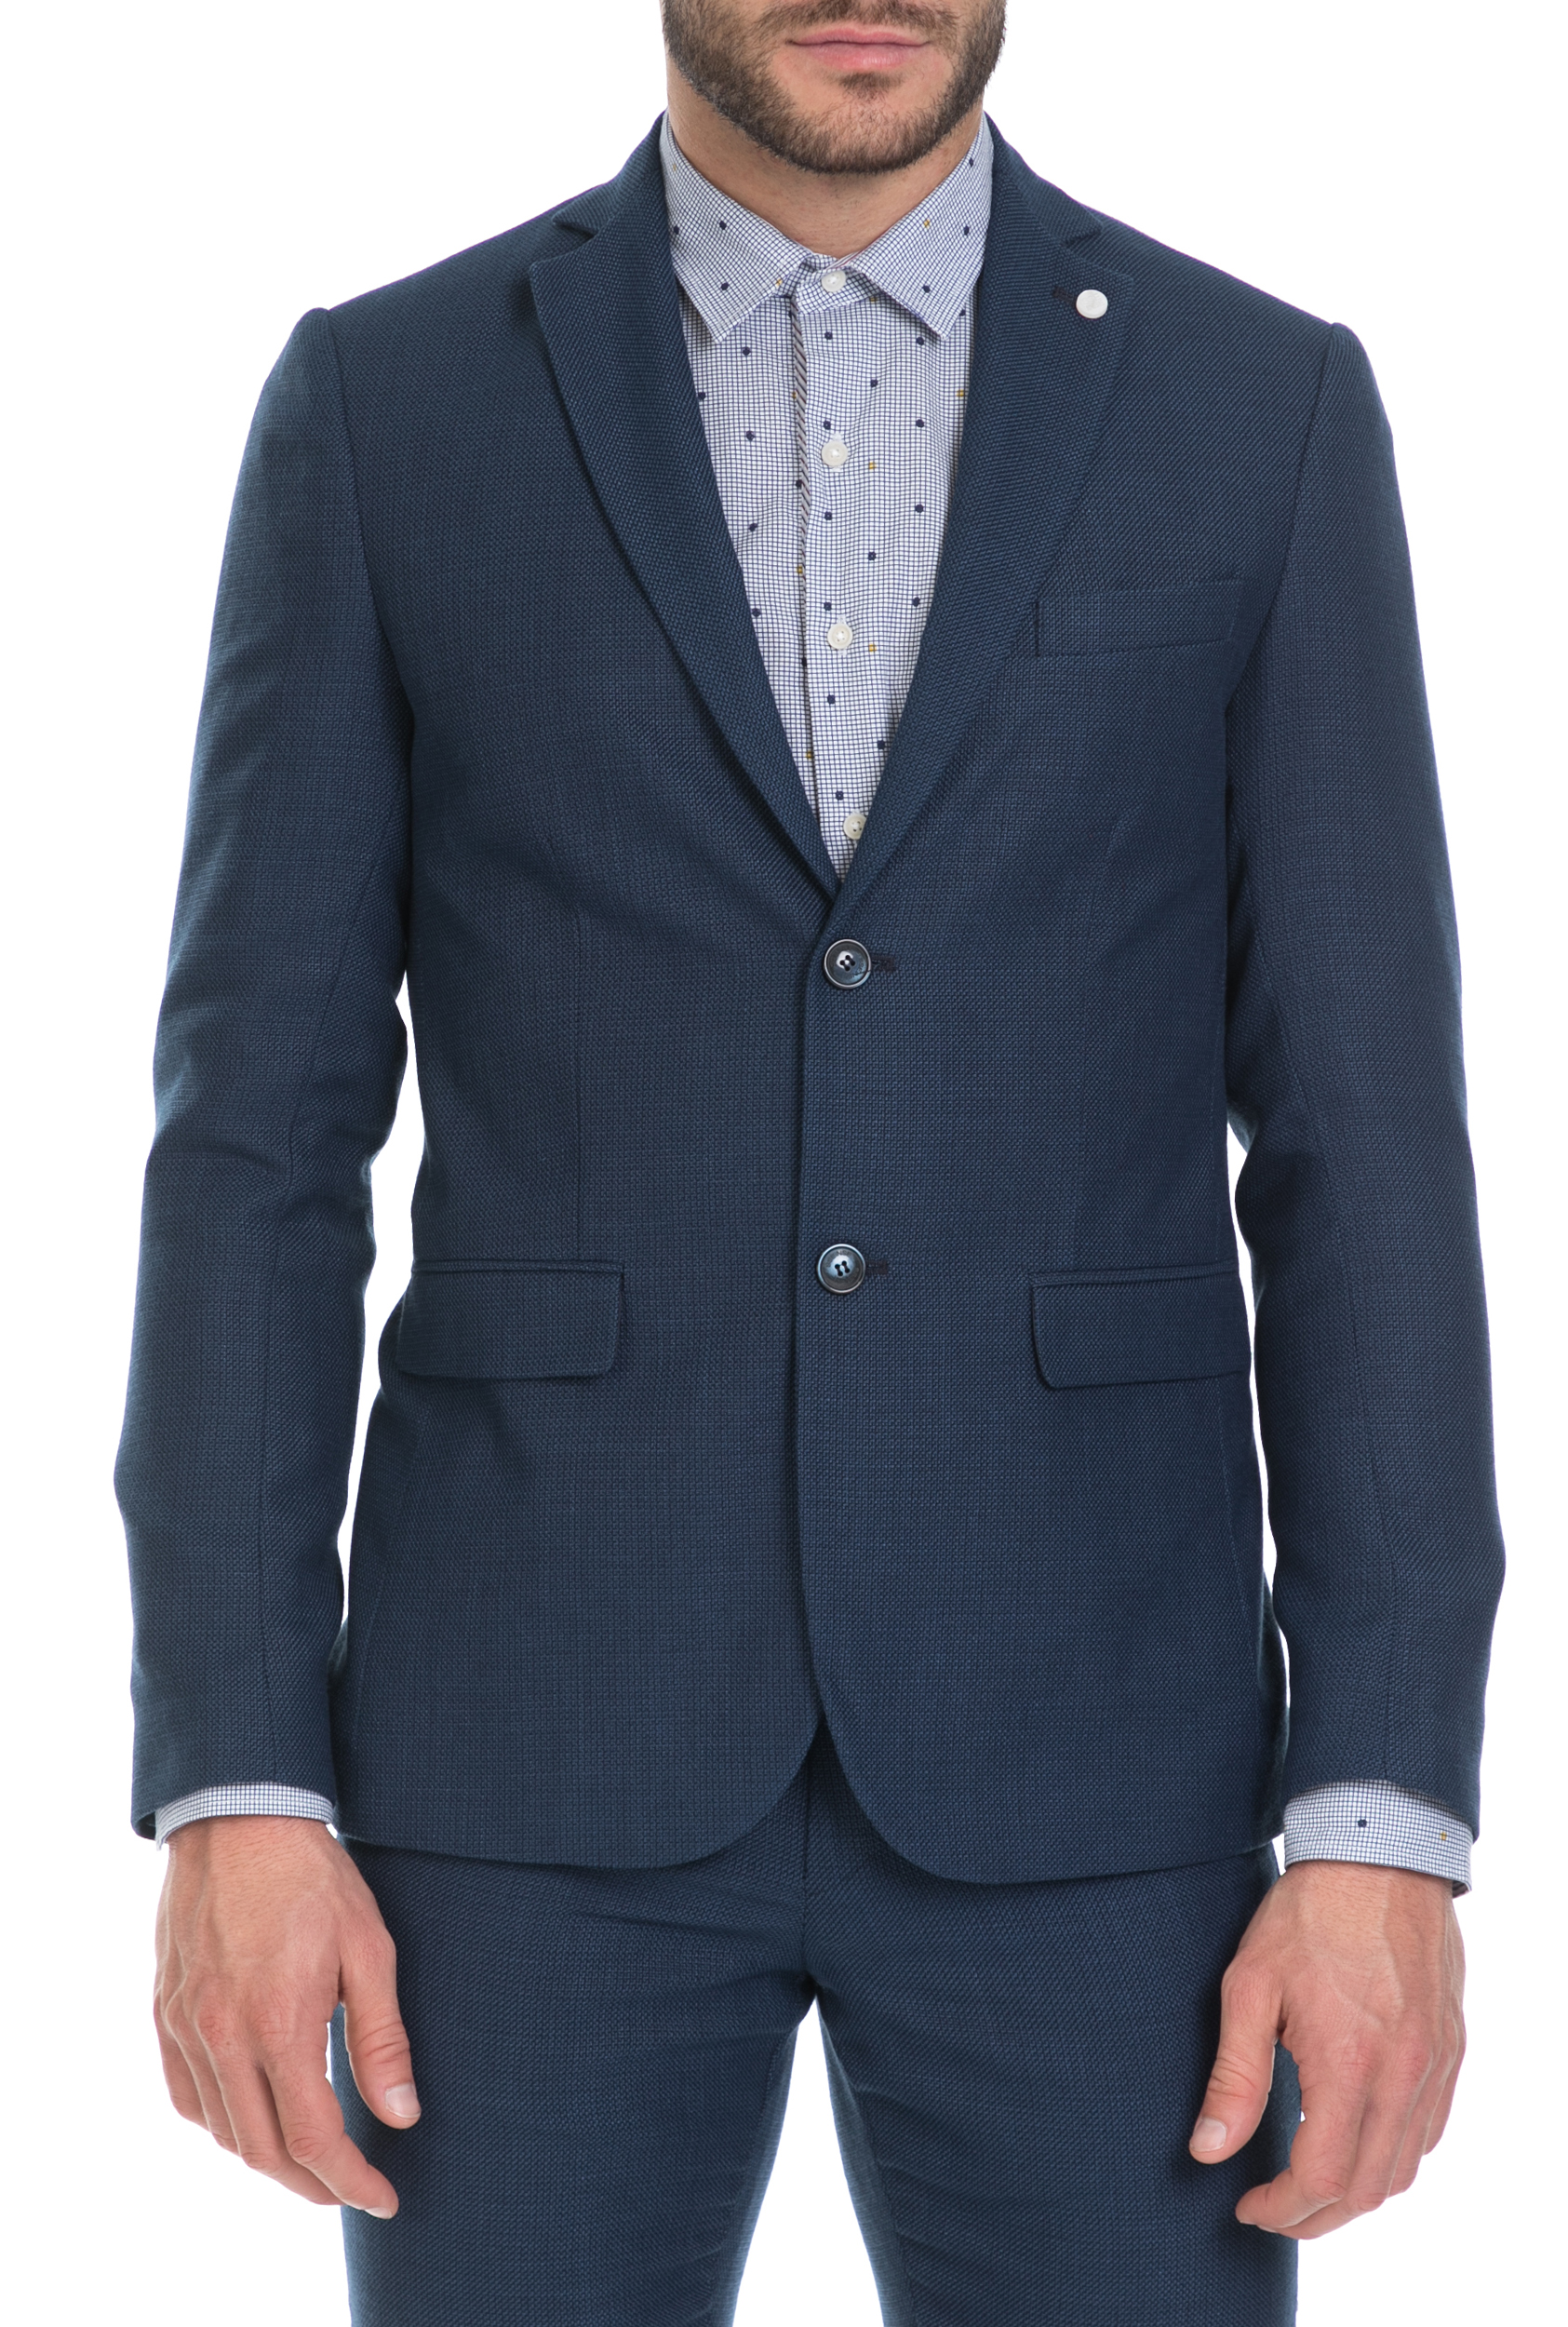 SSEINSE - Ανδρικό σακάκι SSEINSE μπλε Ανδρικά/Ρούχα/Πανωφόρια/Σακάκια